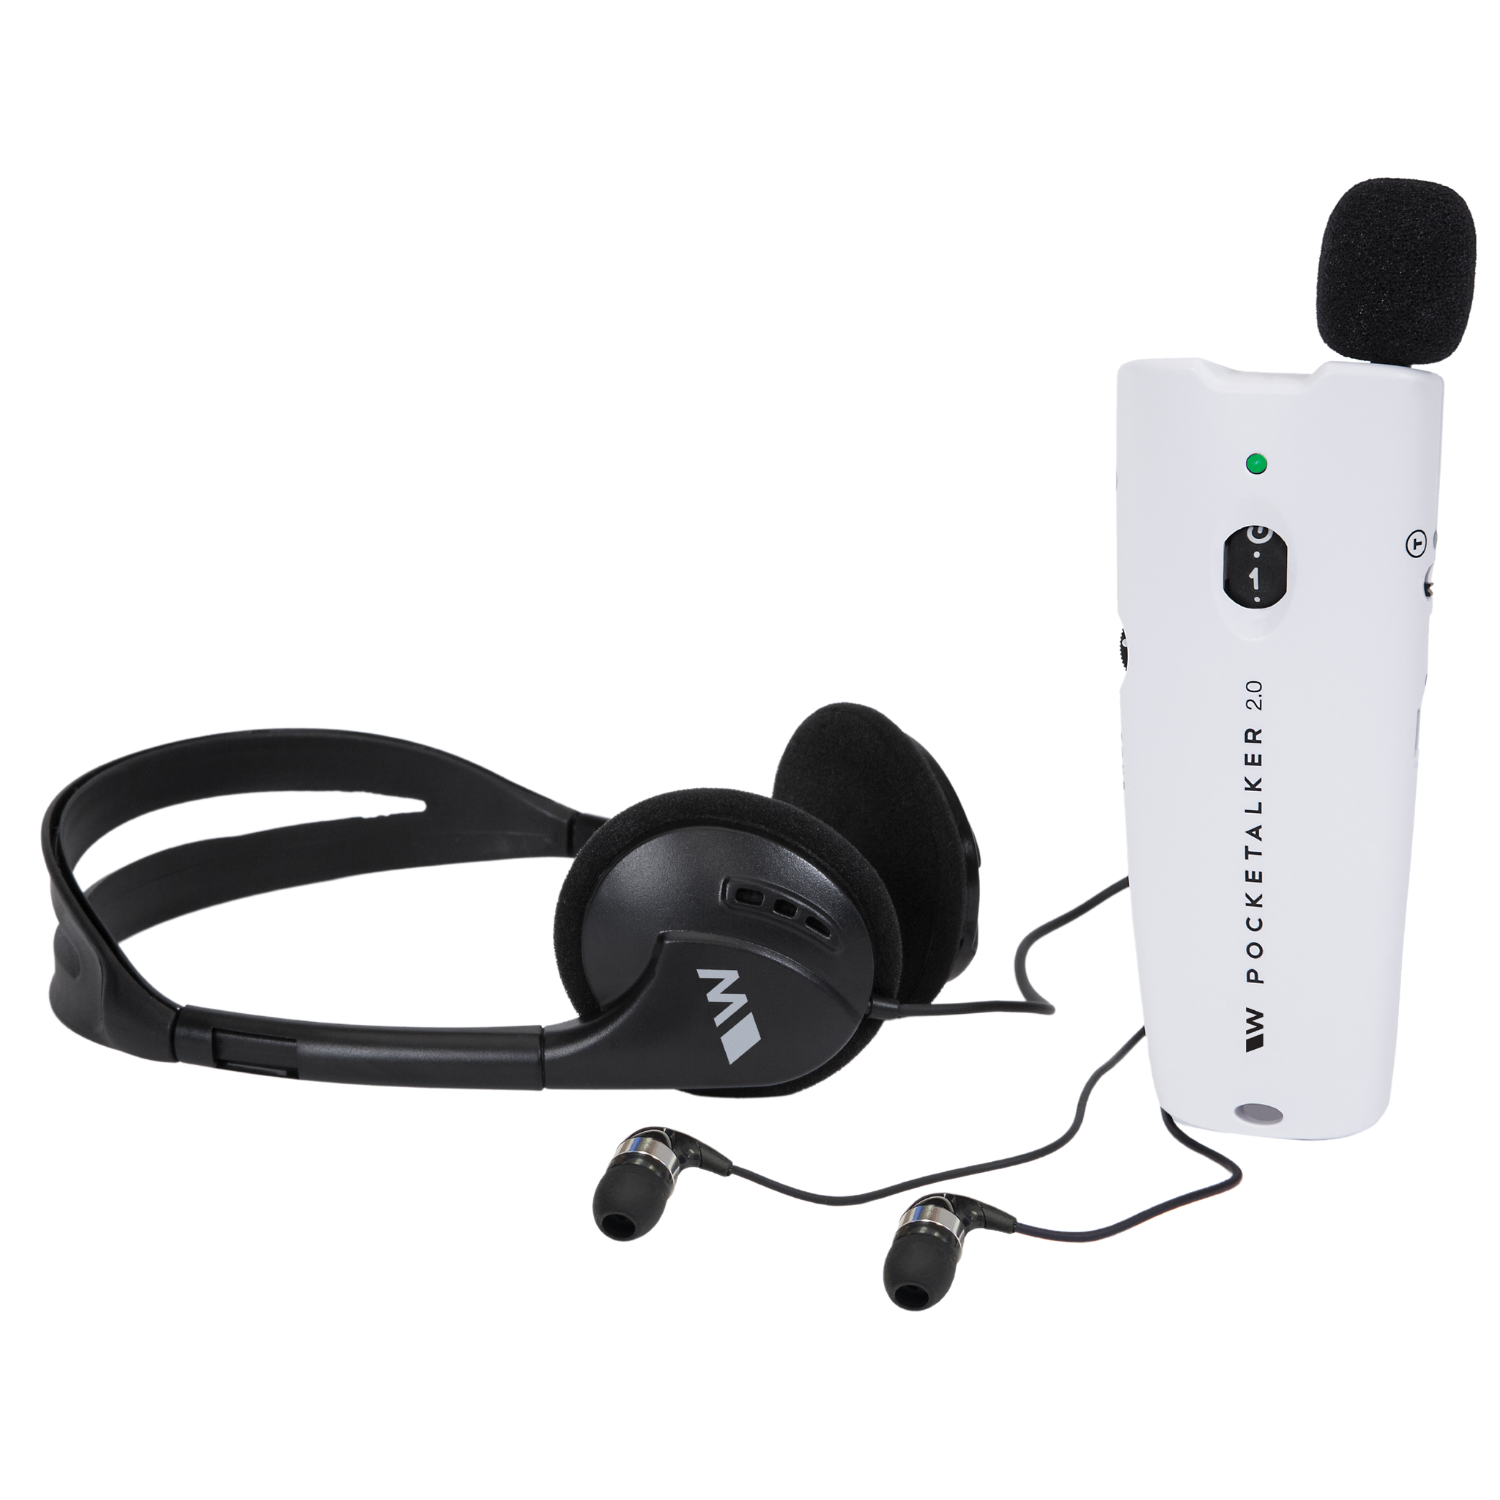 Pocketalker 2.0 Personal Voice Amplifier with ear phones